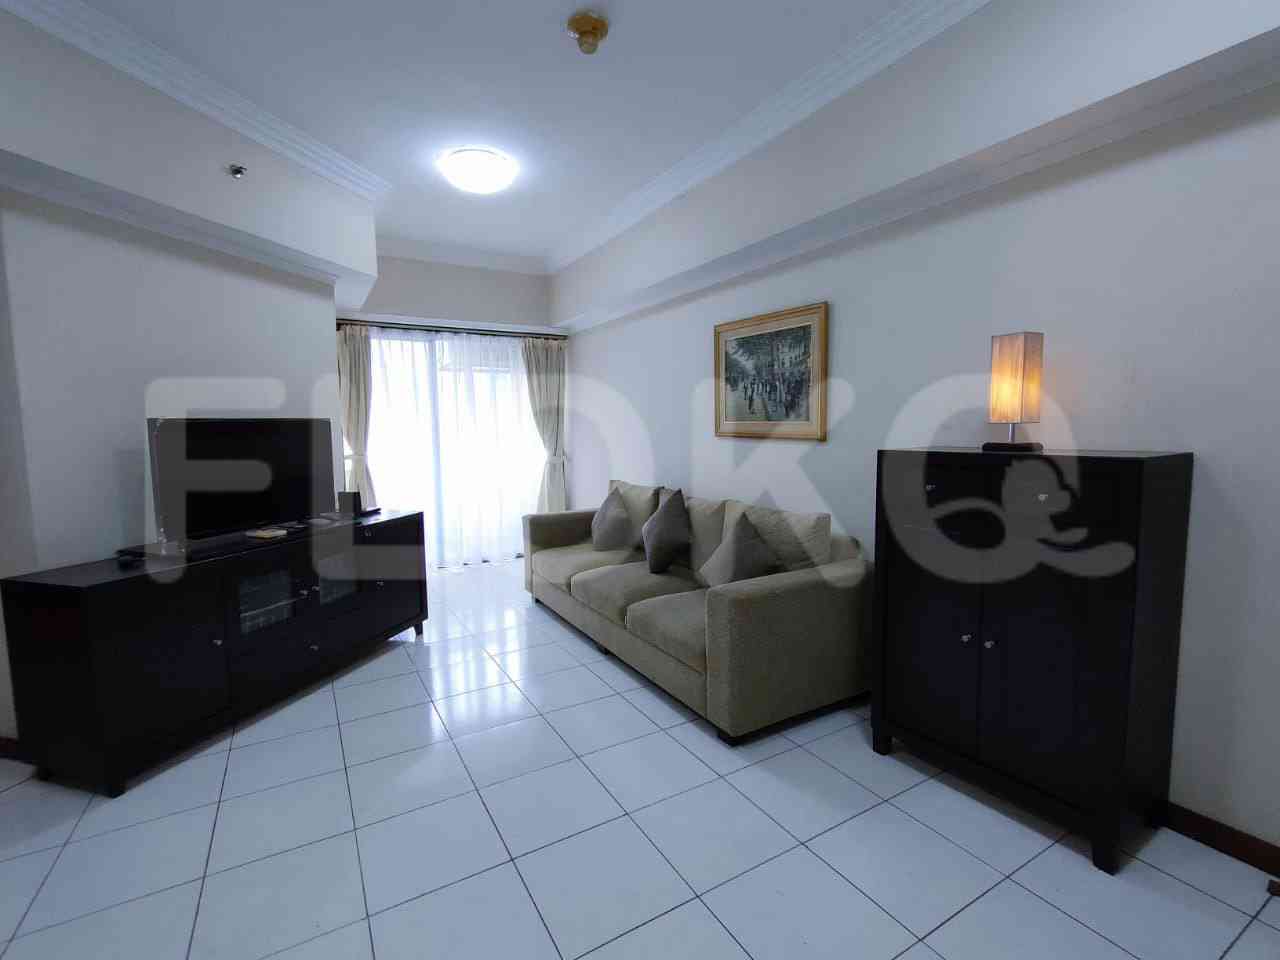 2 Bedroom on 12th Floor for Rent in Aryaduta Suites Semanggi - fsu0f7 4